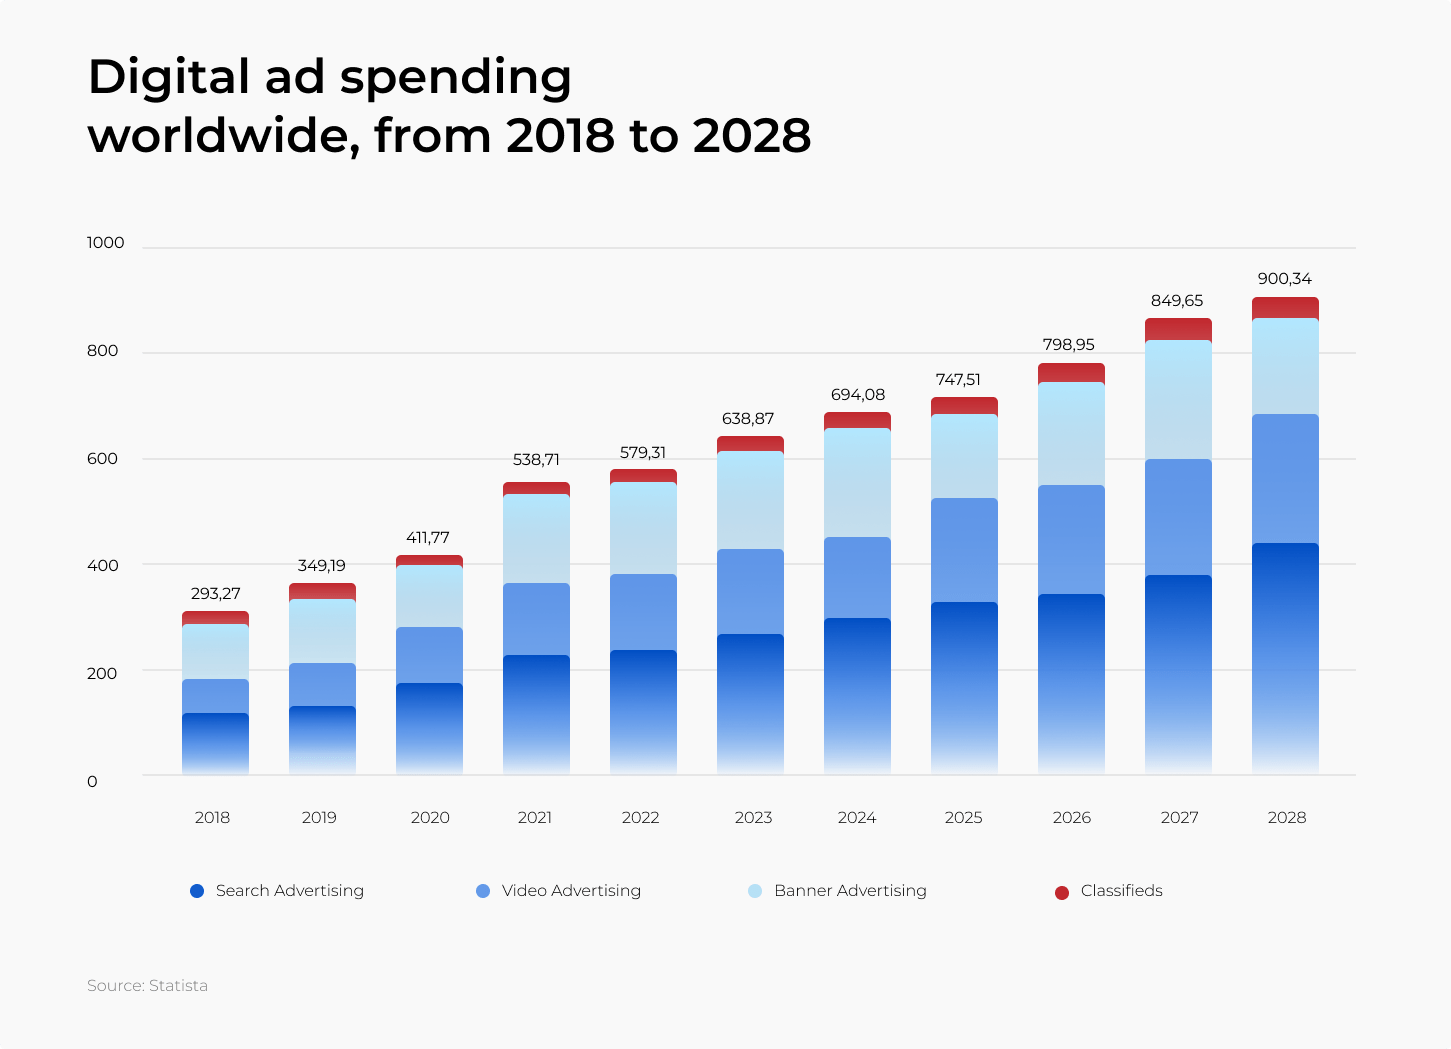 Digital ad spending worldwide, from 2018 to 2028 (in bn U.S. dollars)